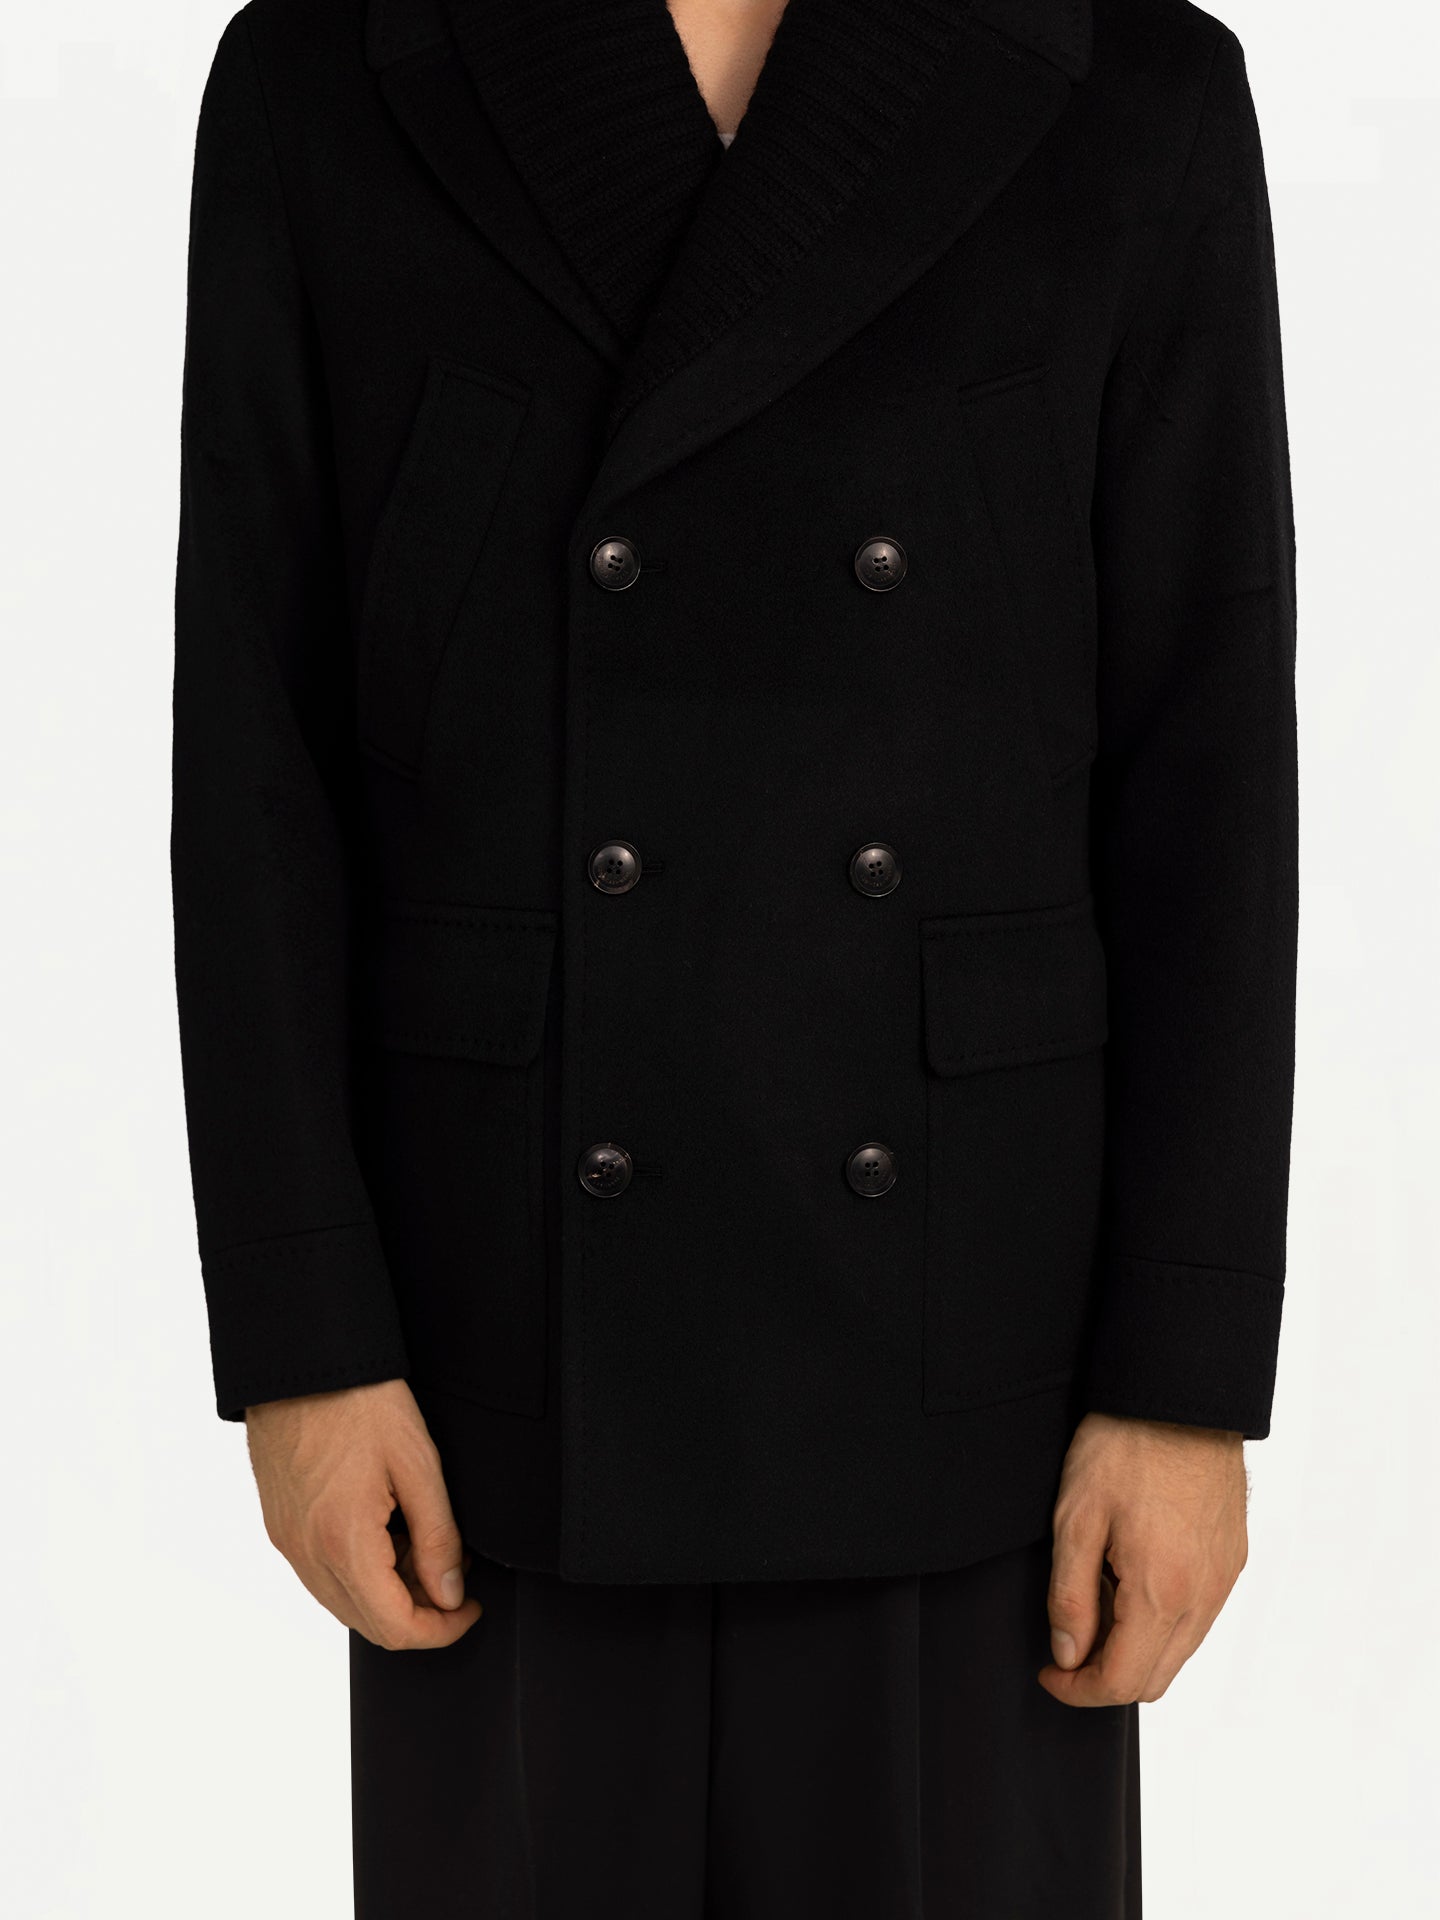 Men's Cashmere Double-Breasted Cashmere Jacket Black - Gobi Cashmere